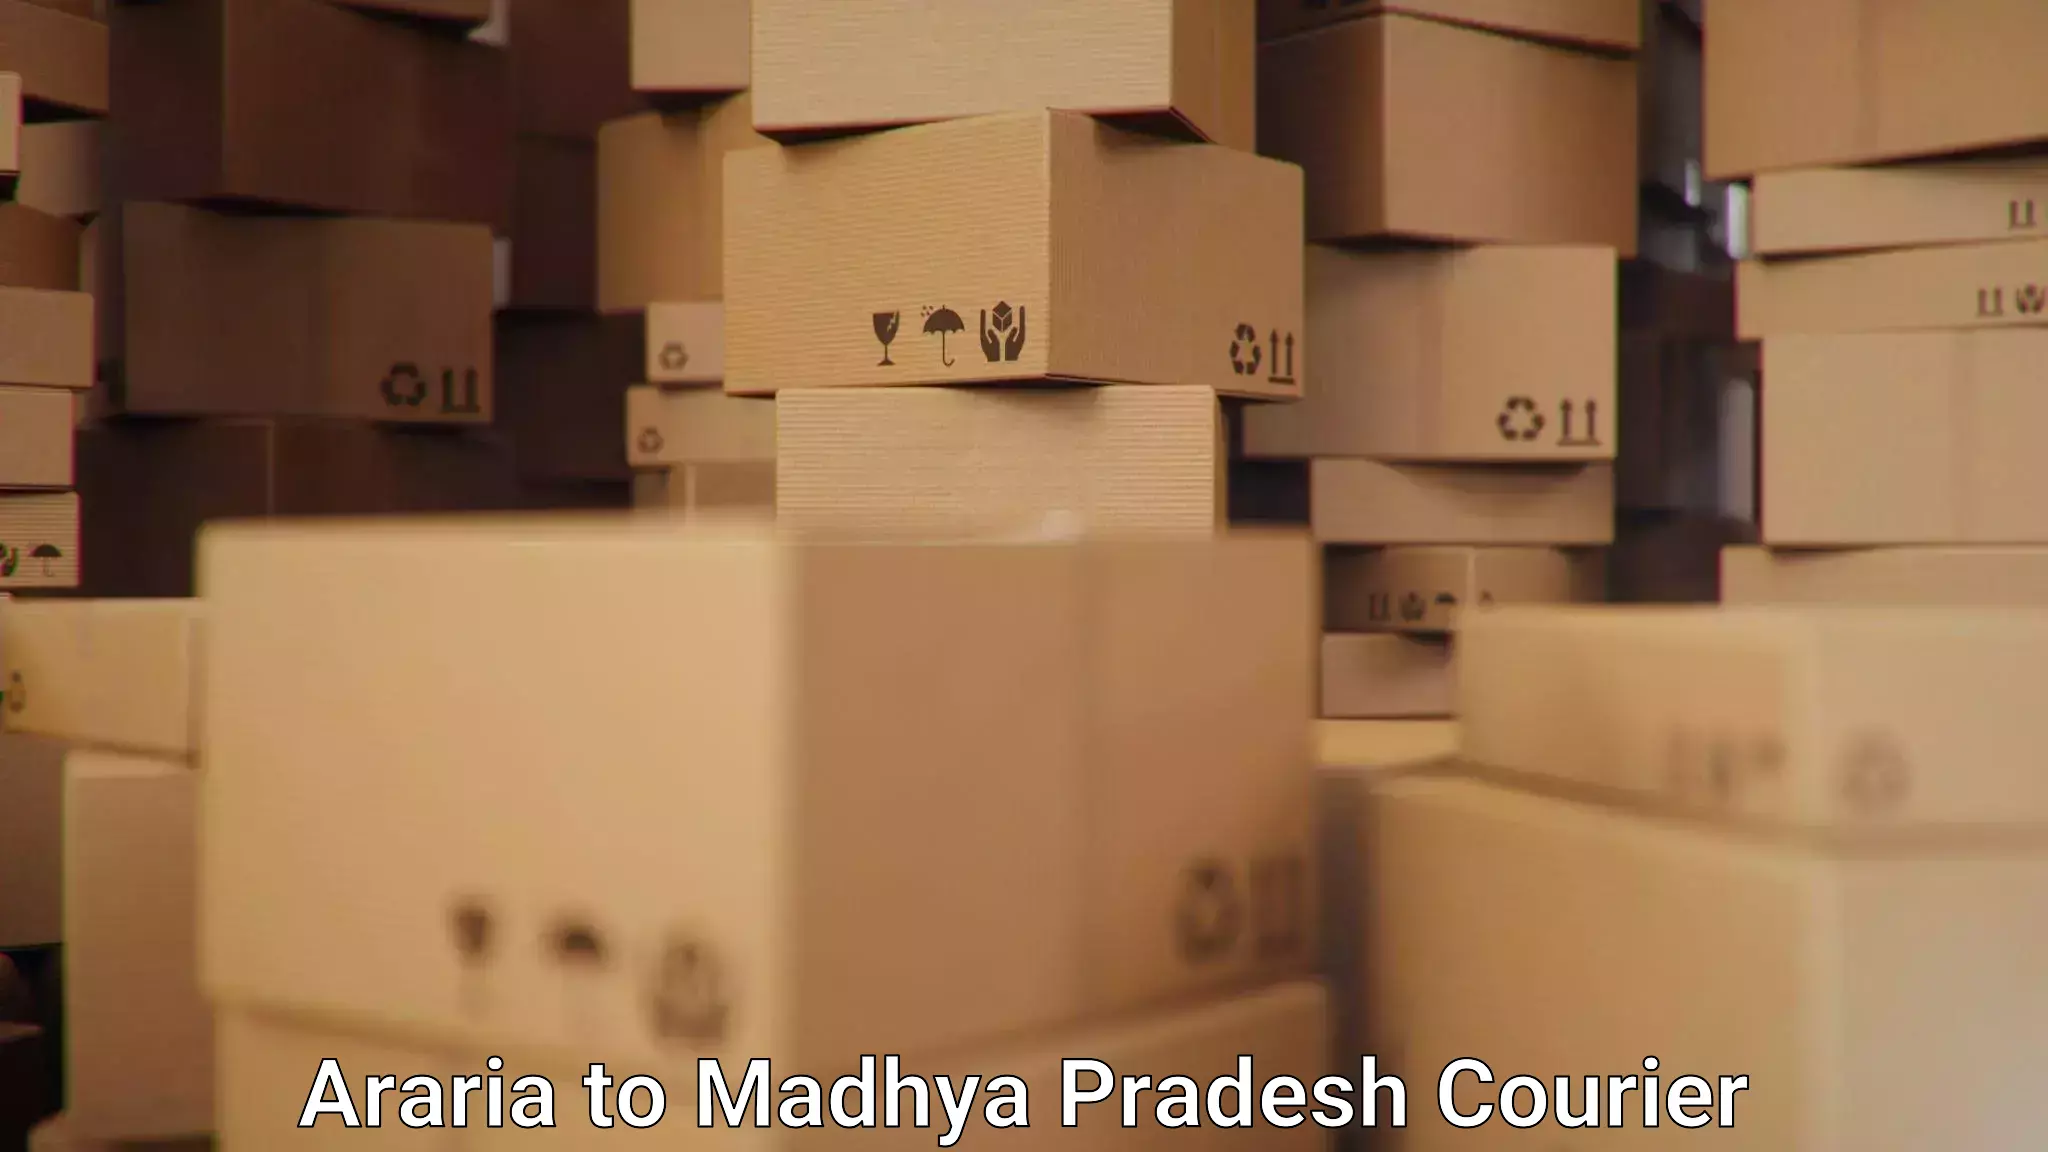 Global logistics network Araria to Madhya Pradesh